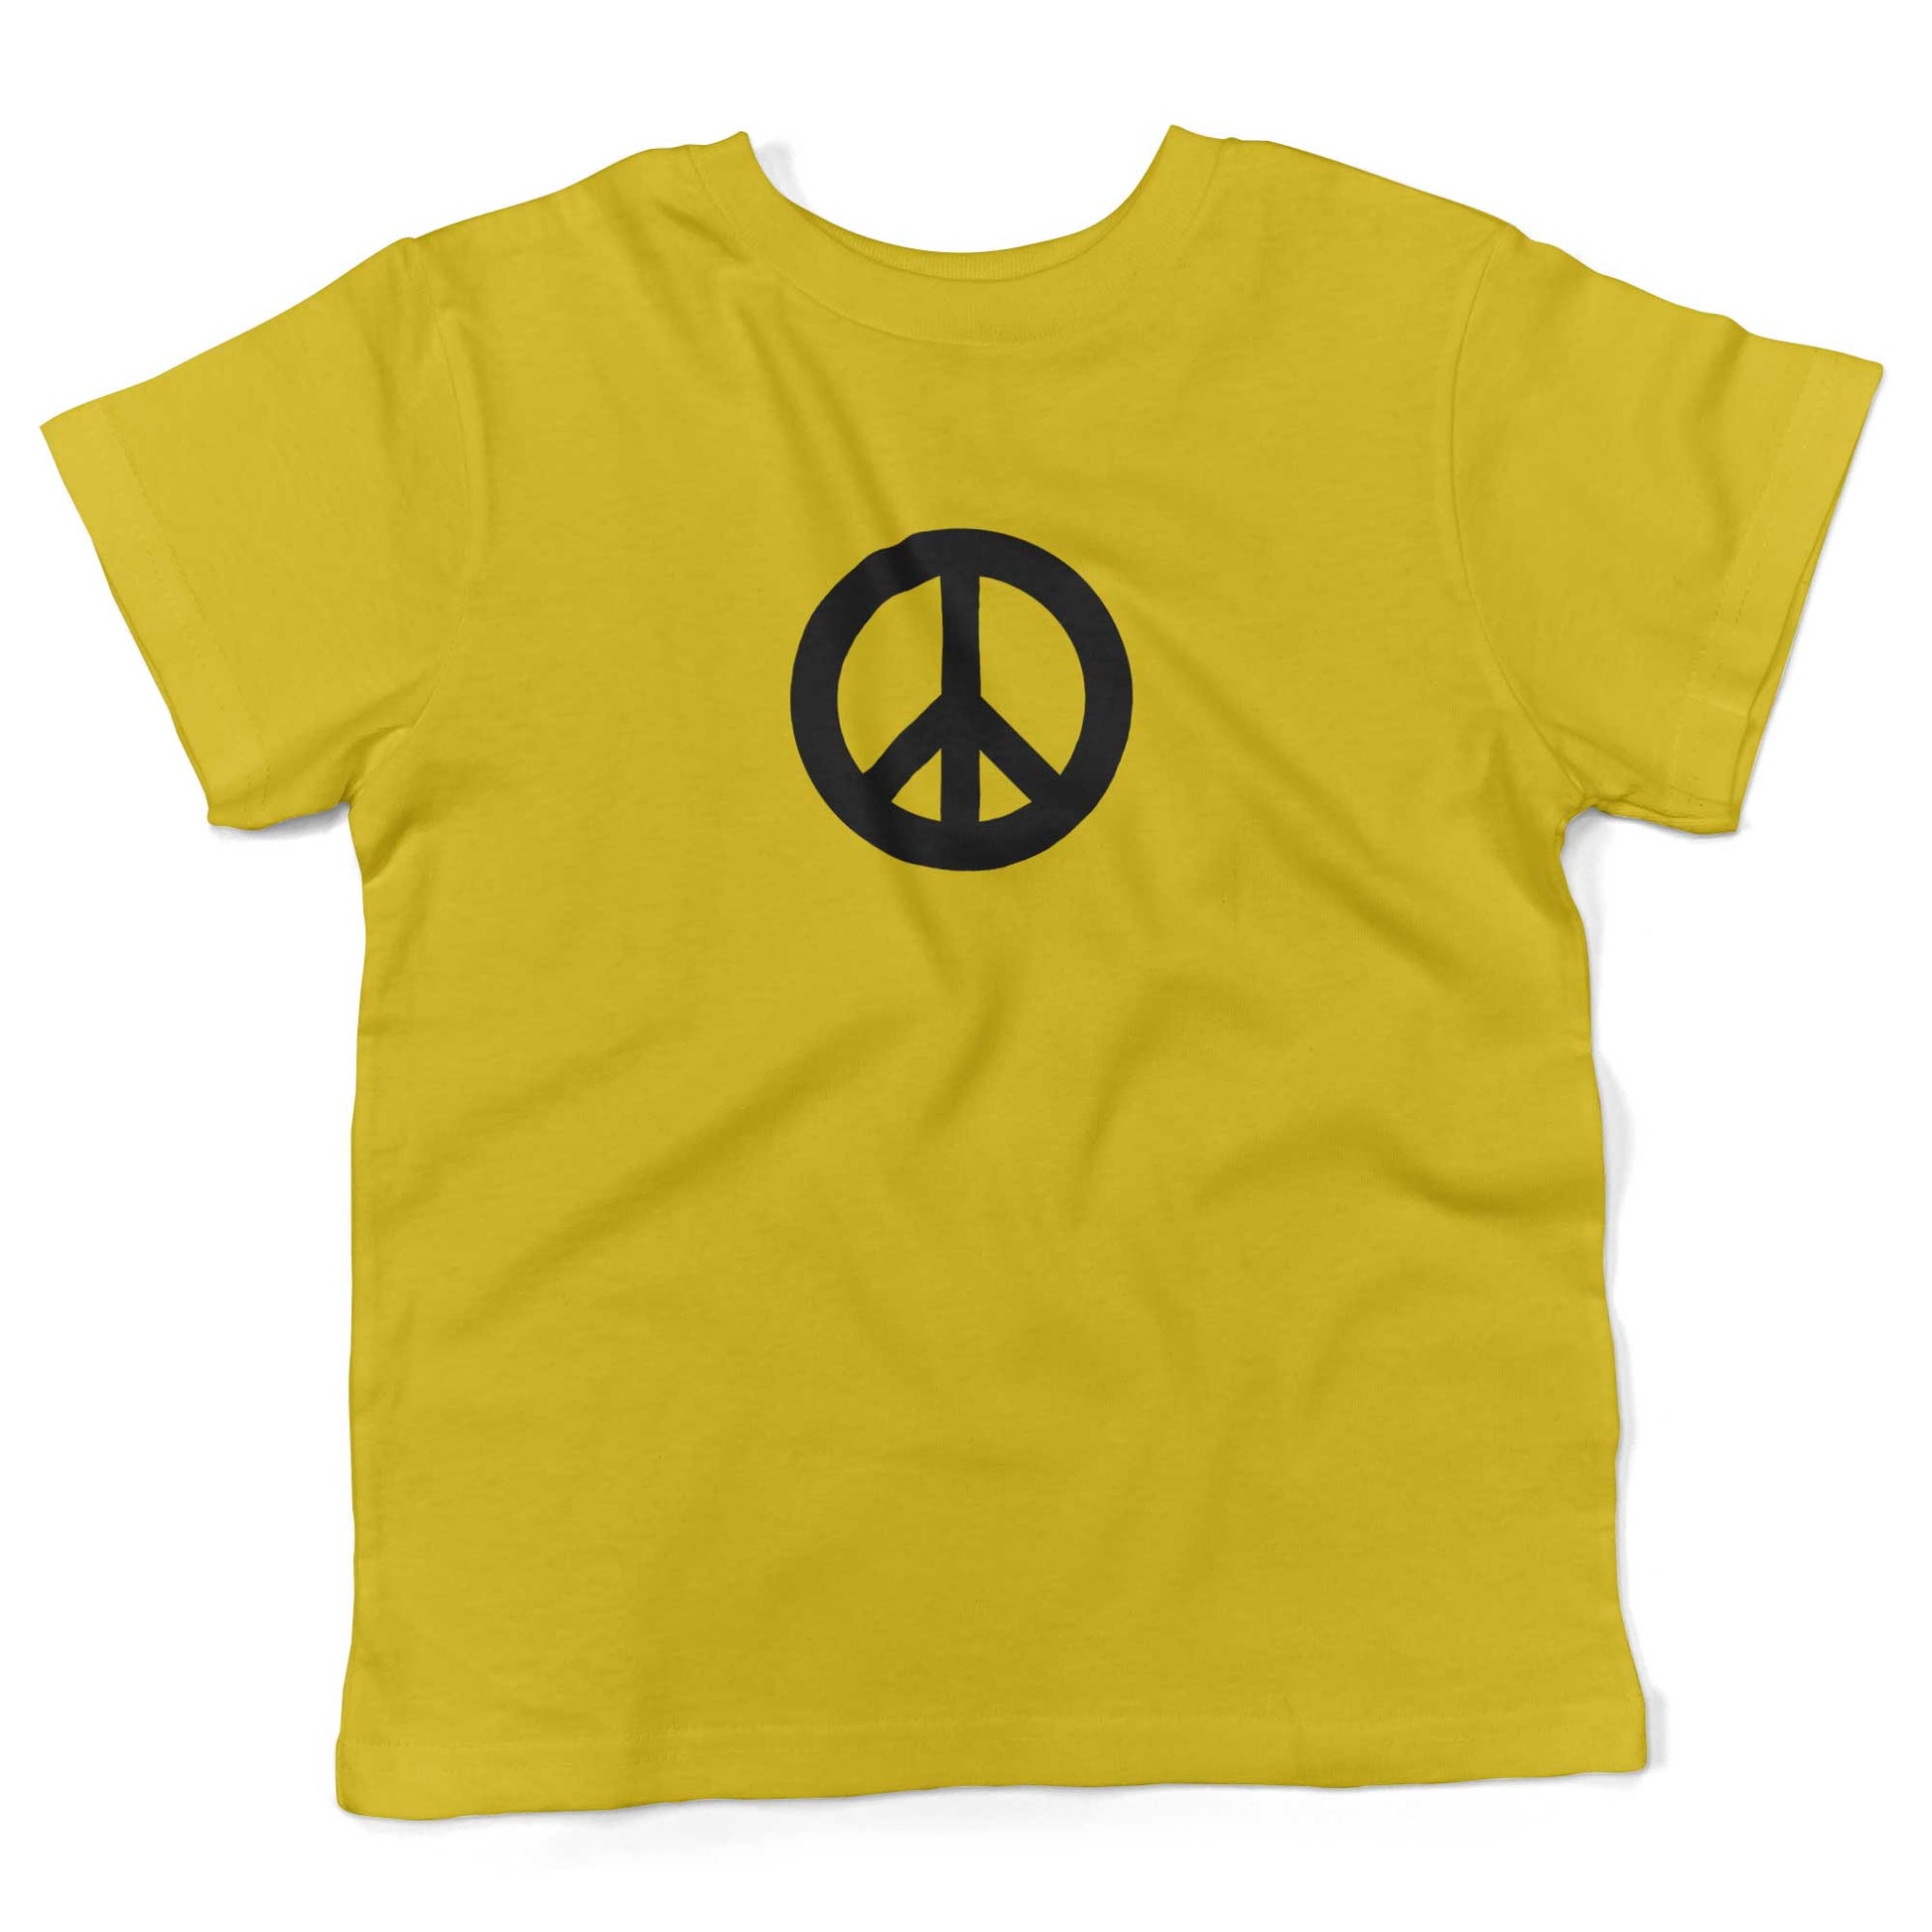 Peace Sign Toddler Shirt-Sunshine Yellow-2T